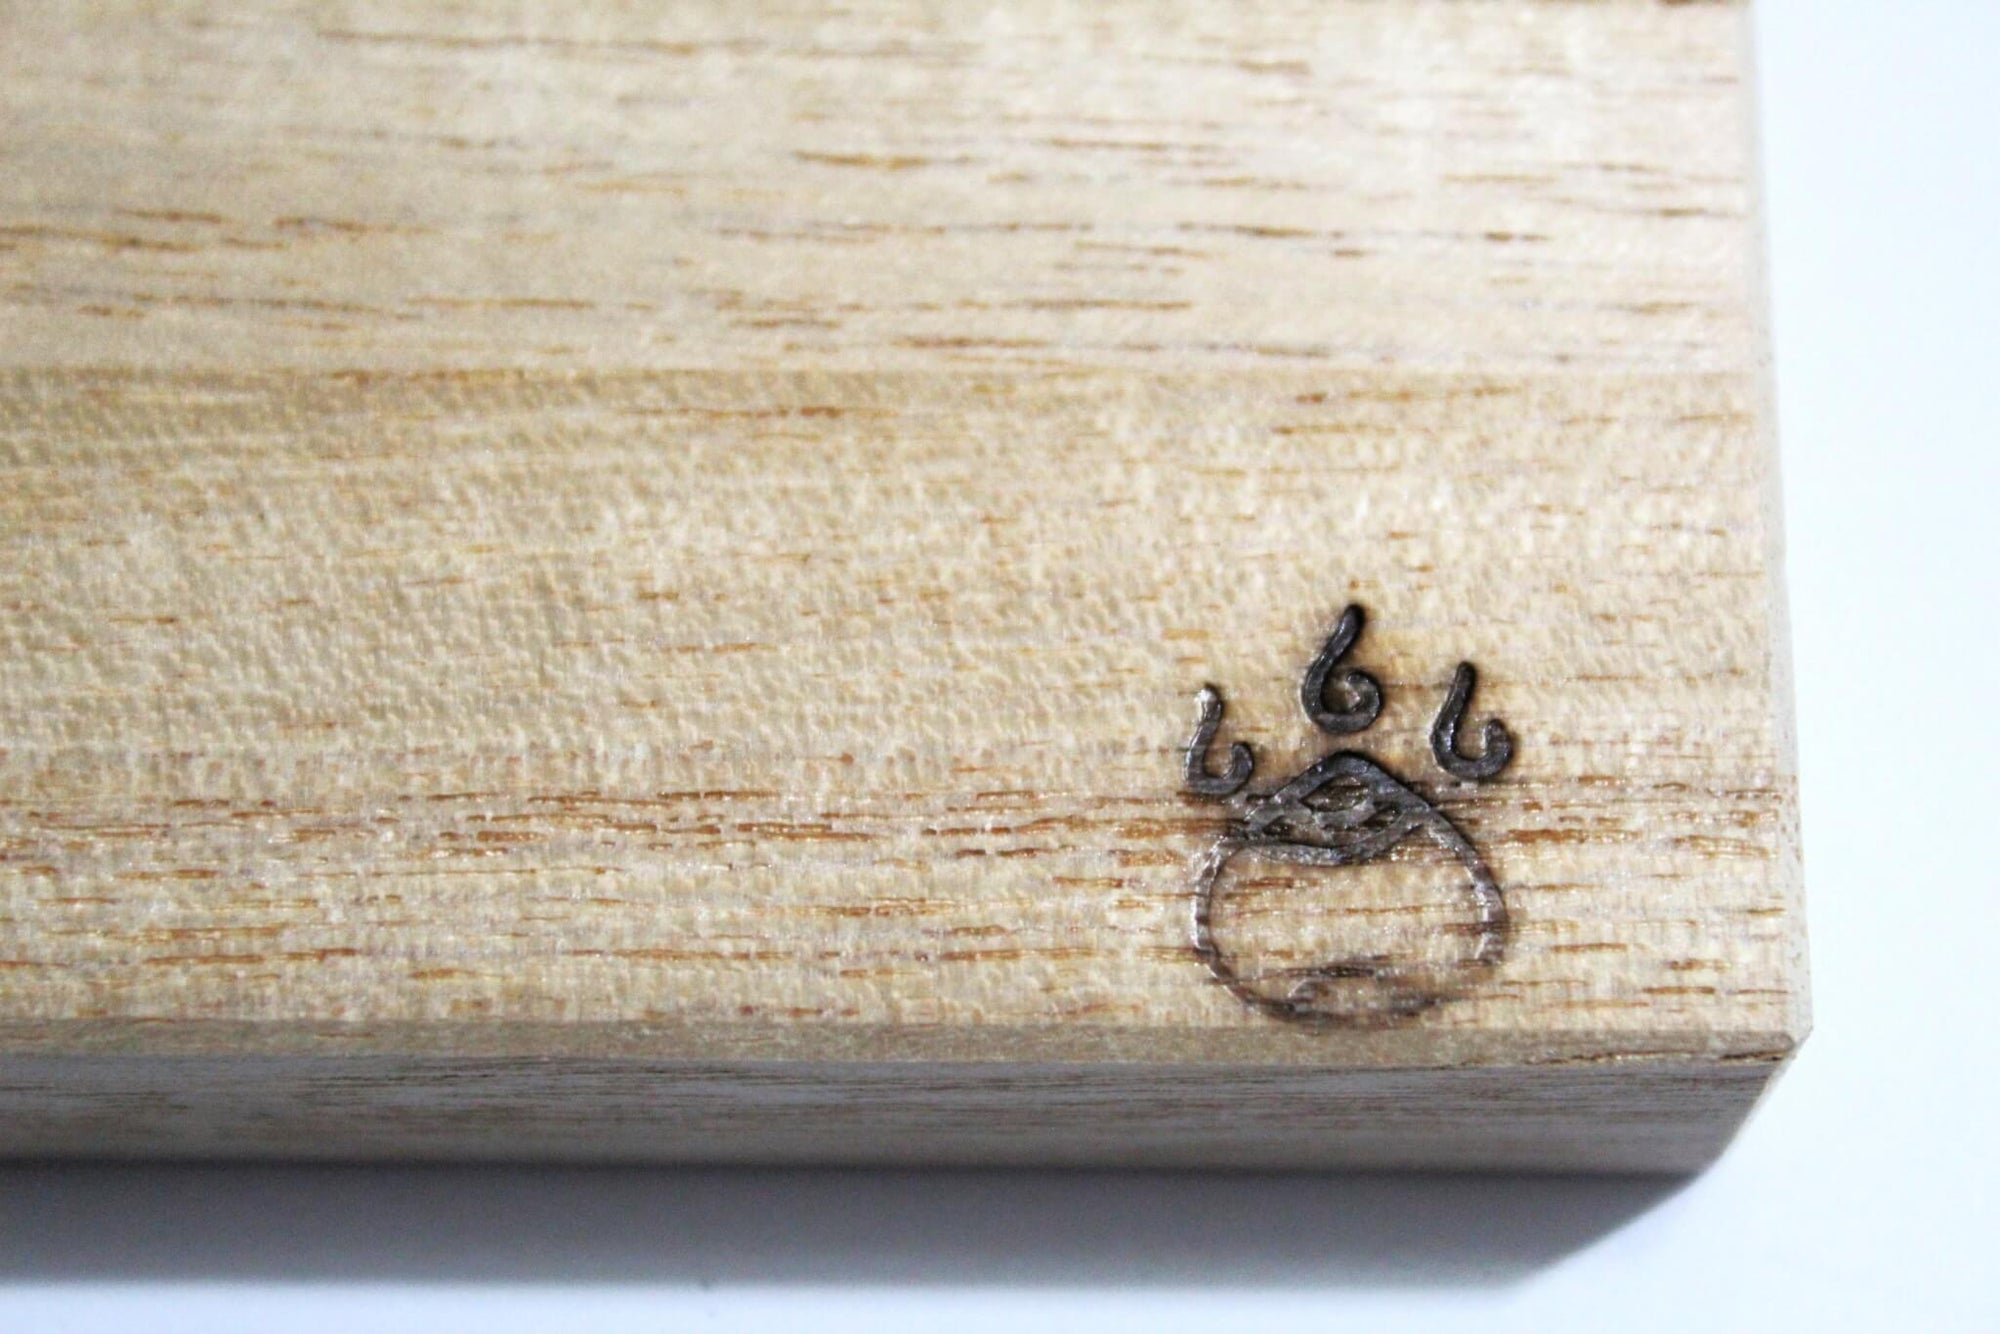 Cutting Board Made from Echizen Paulownia Wood Small